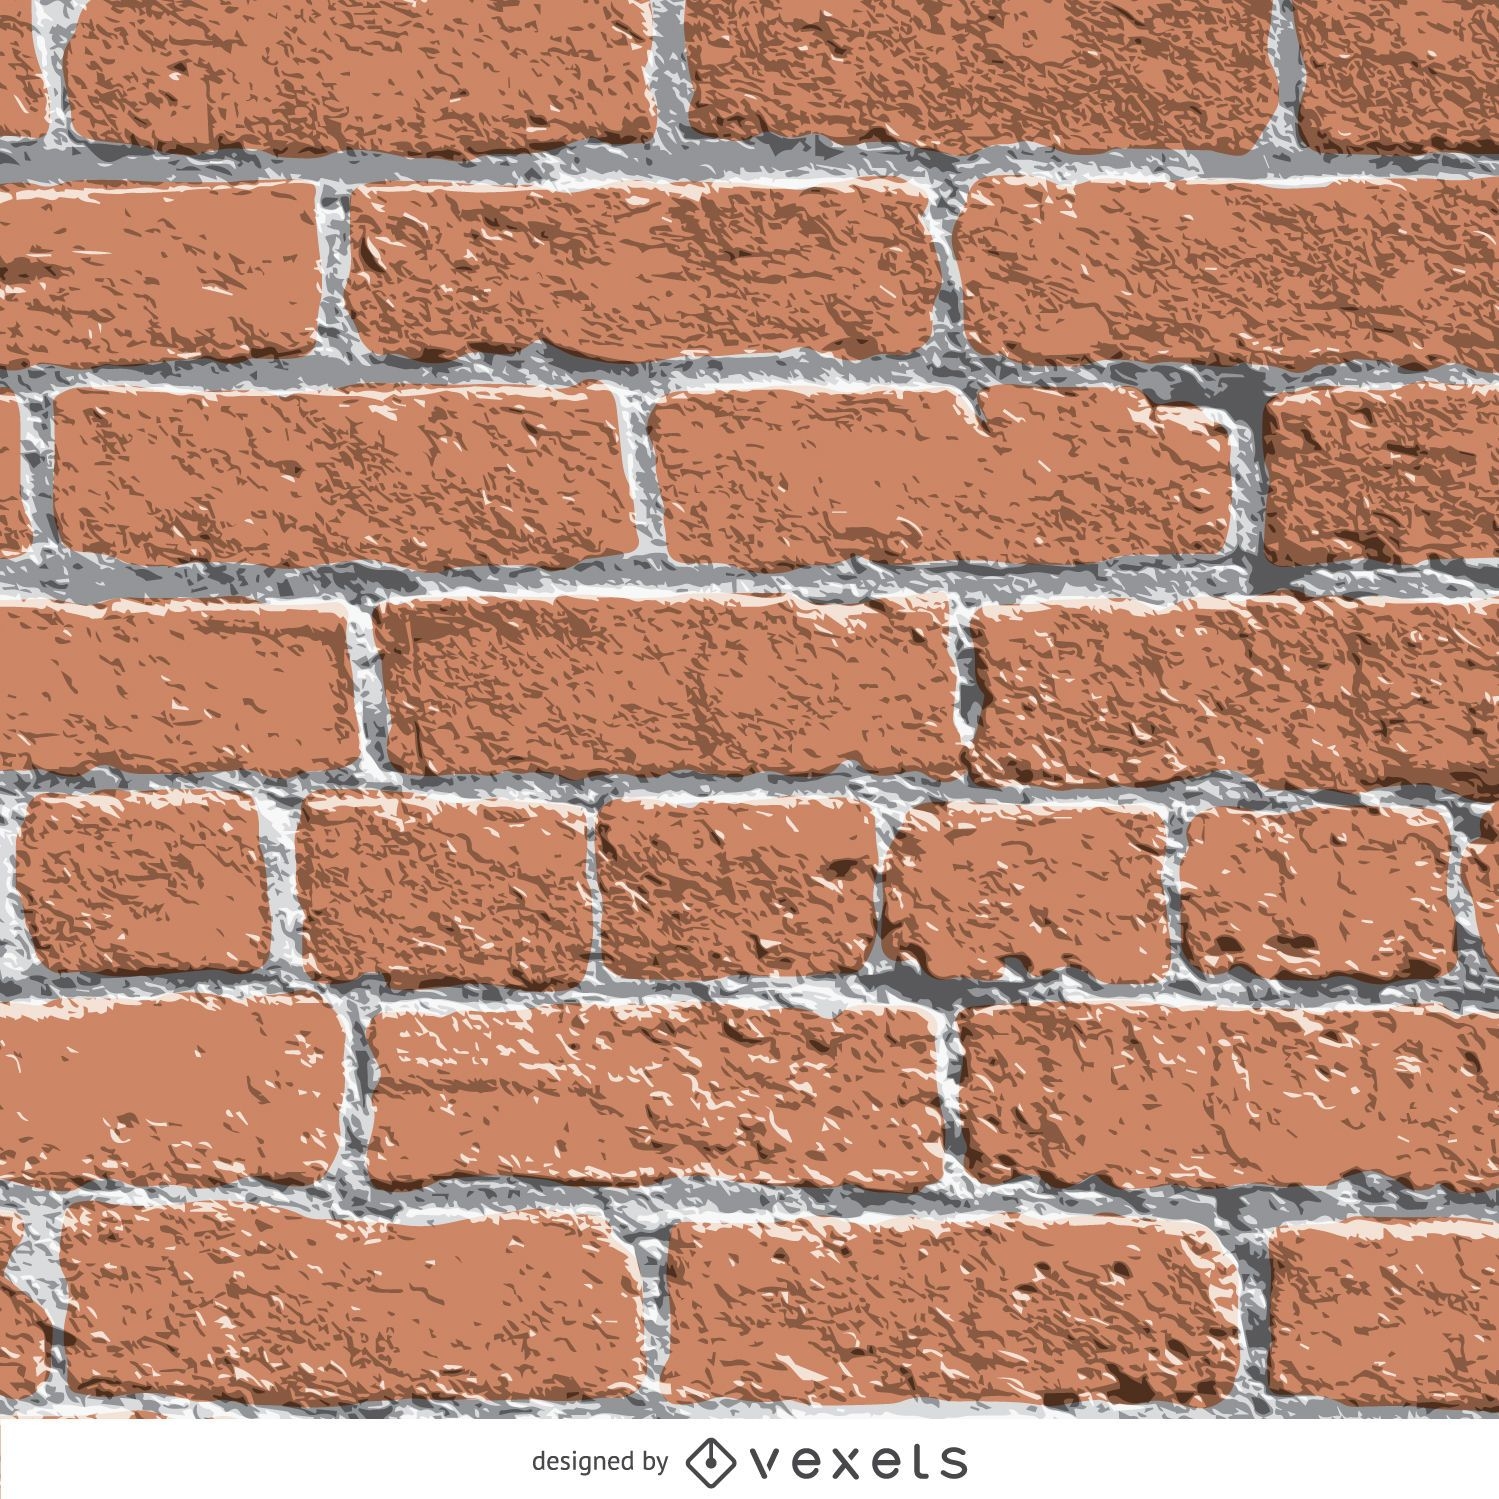 Realistic brick wall texture